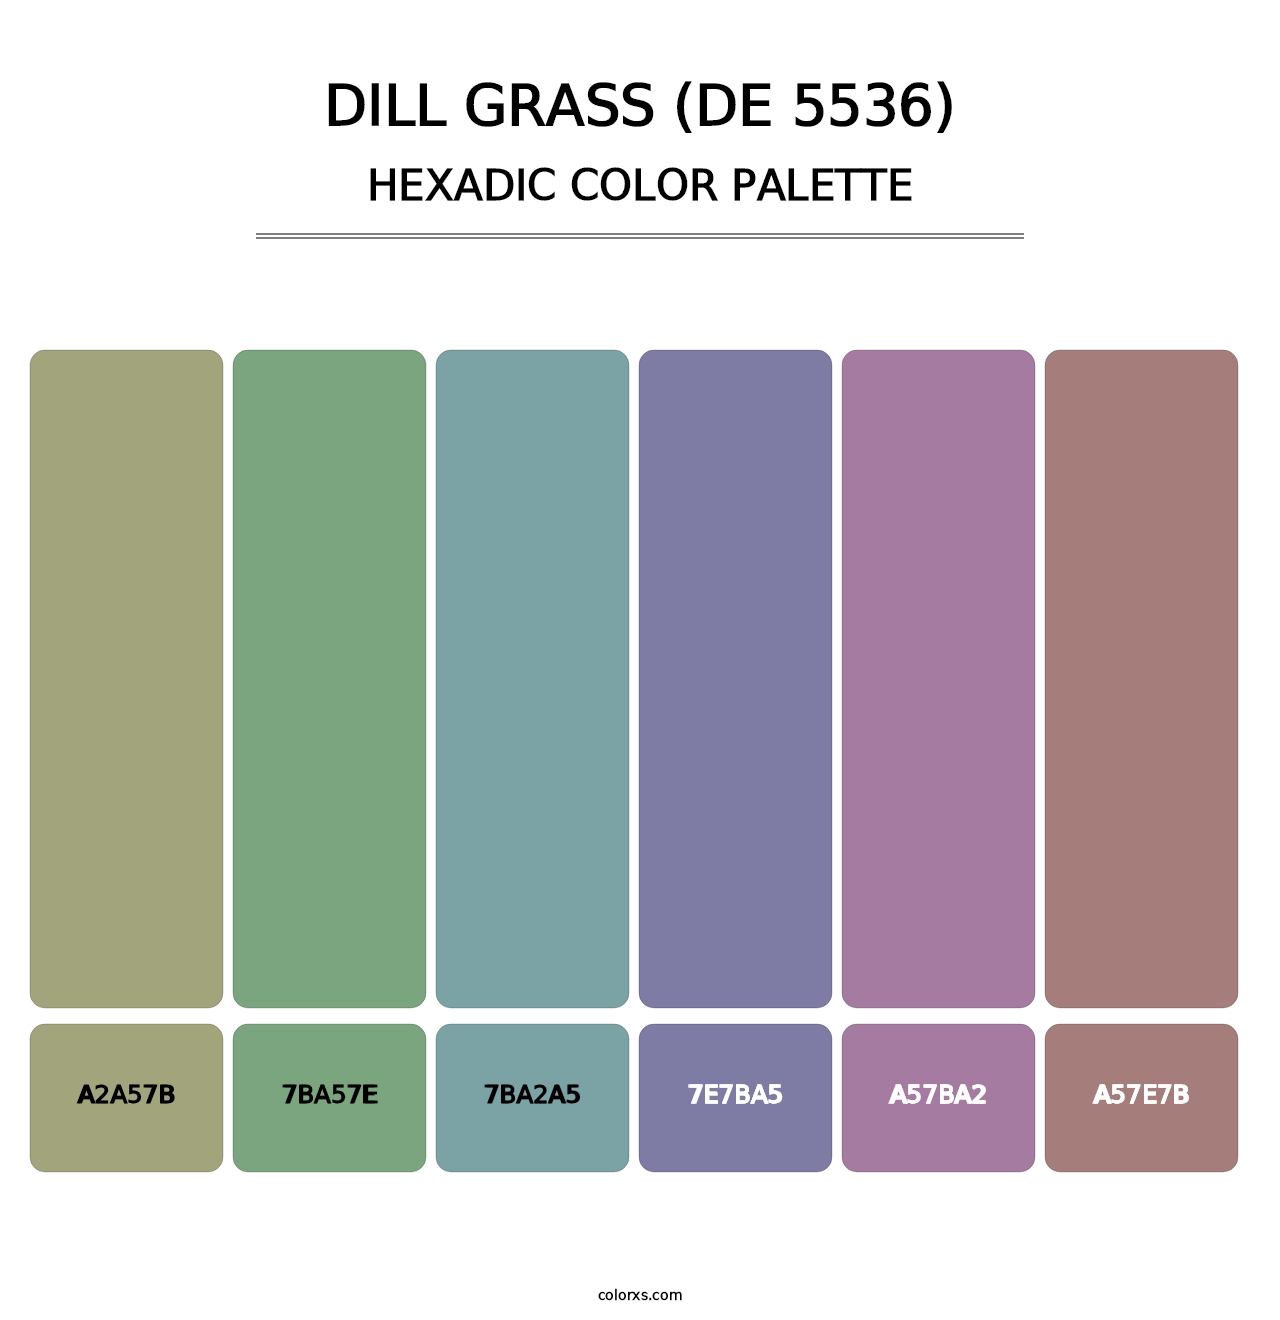 Dill Grass (DE 5536) - Hexadic Color Palette